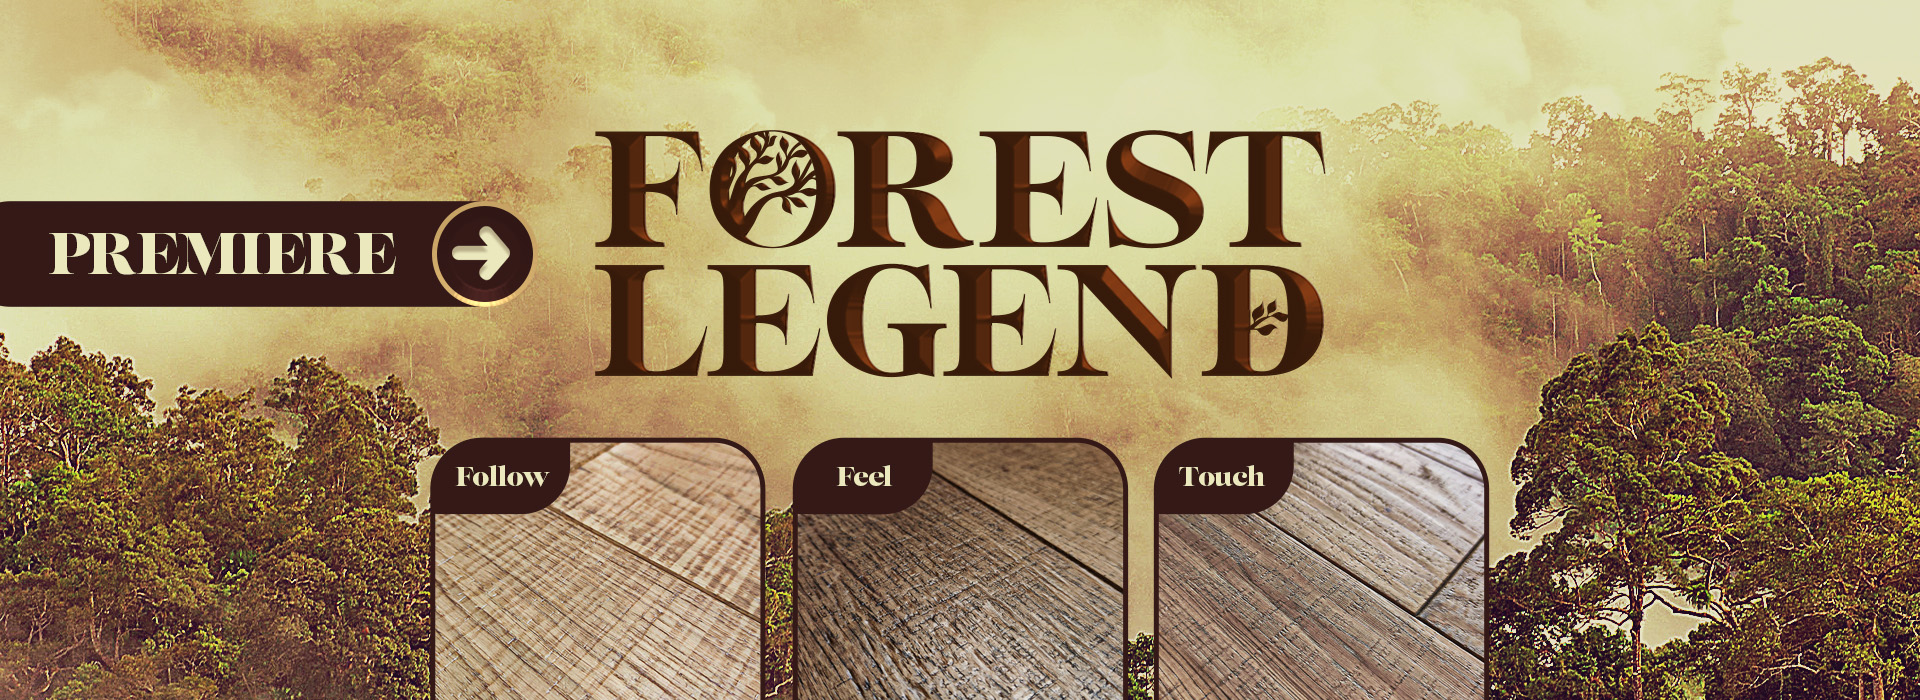 slider forest legend en xxl xl lg